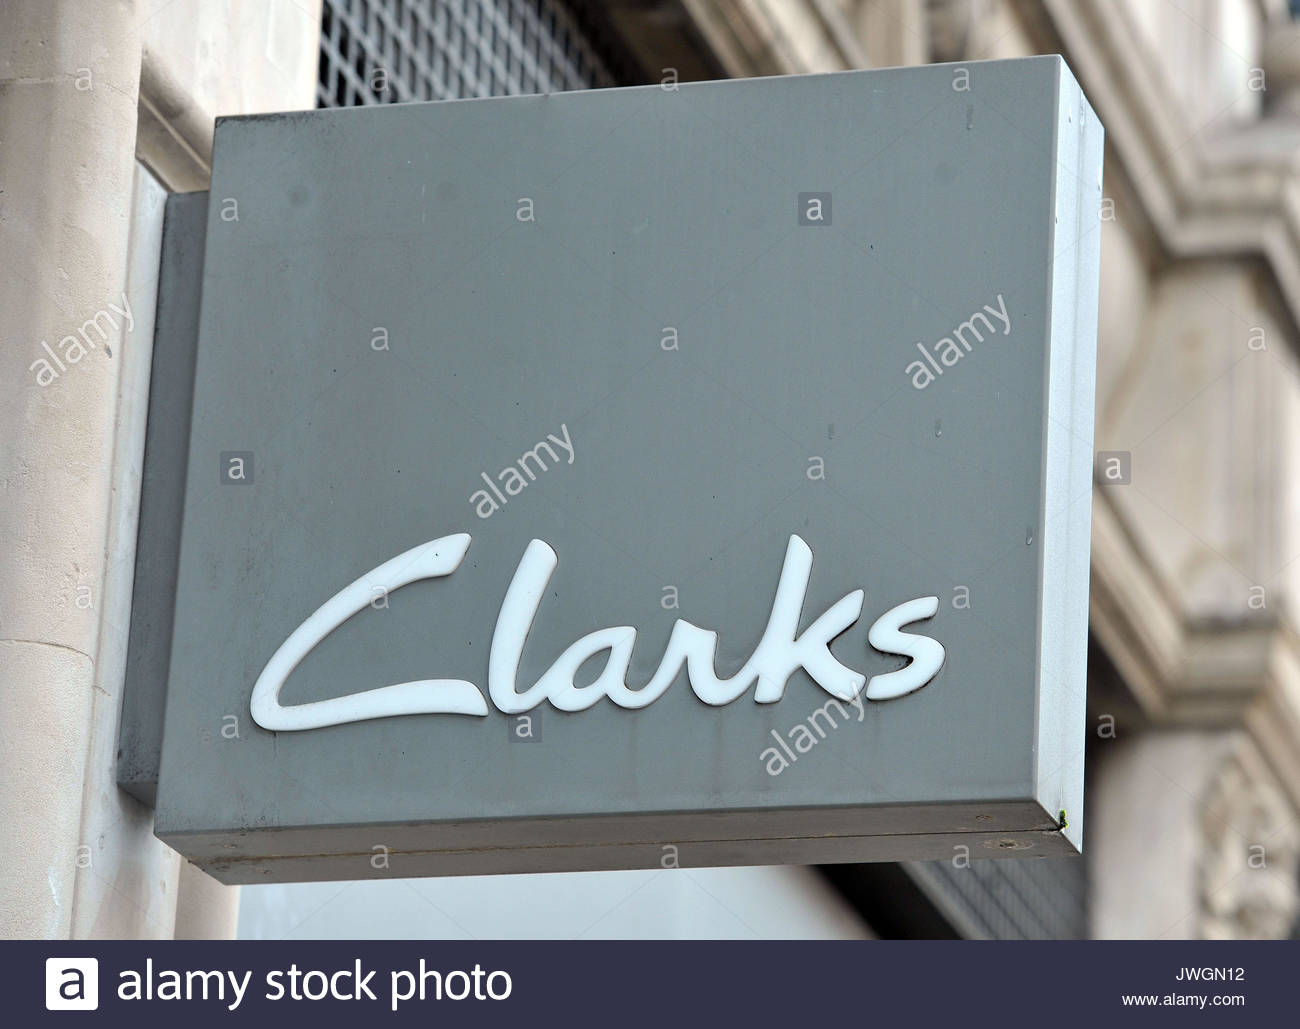 clarks city of london